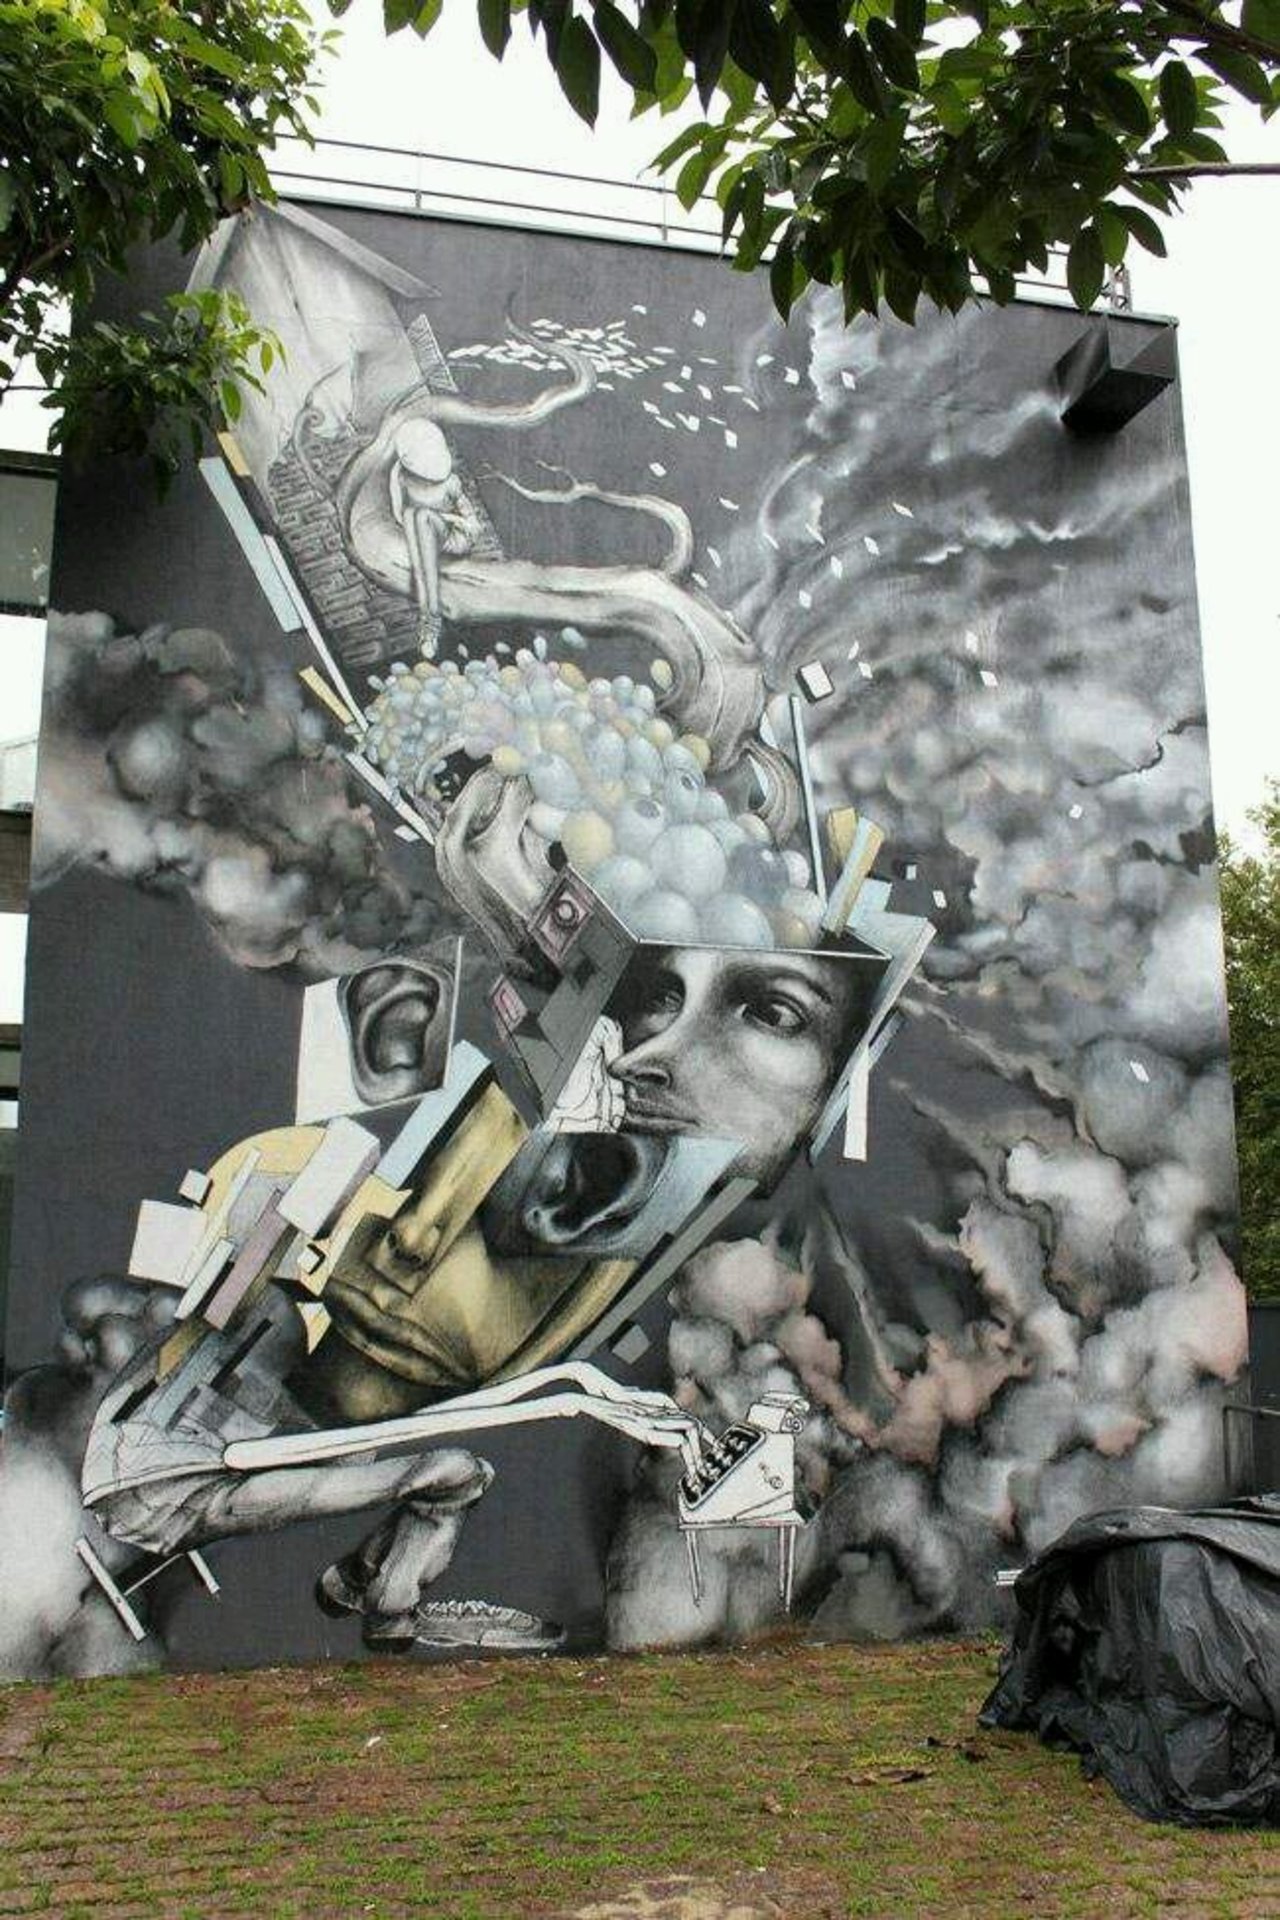 RT gamze_ng: #streetart #graffiti  https://t.co/UghF9UlWf8 https://goo.gl/t4fpx2